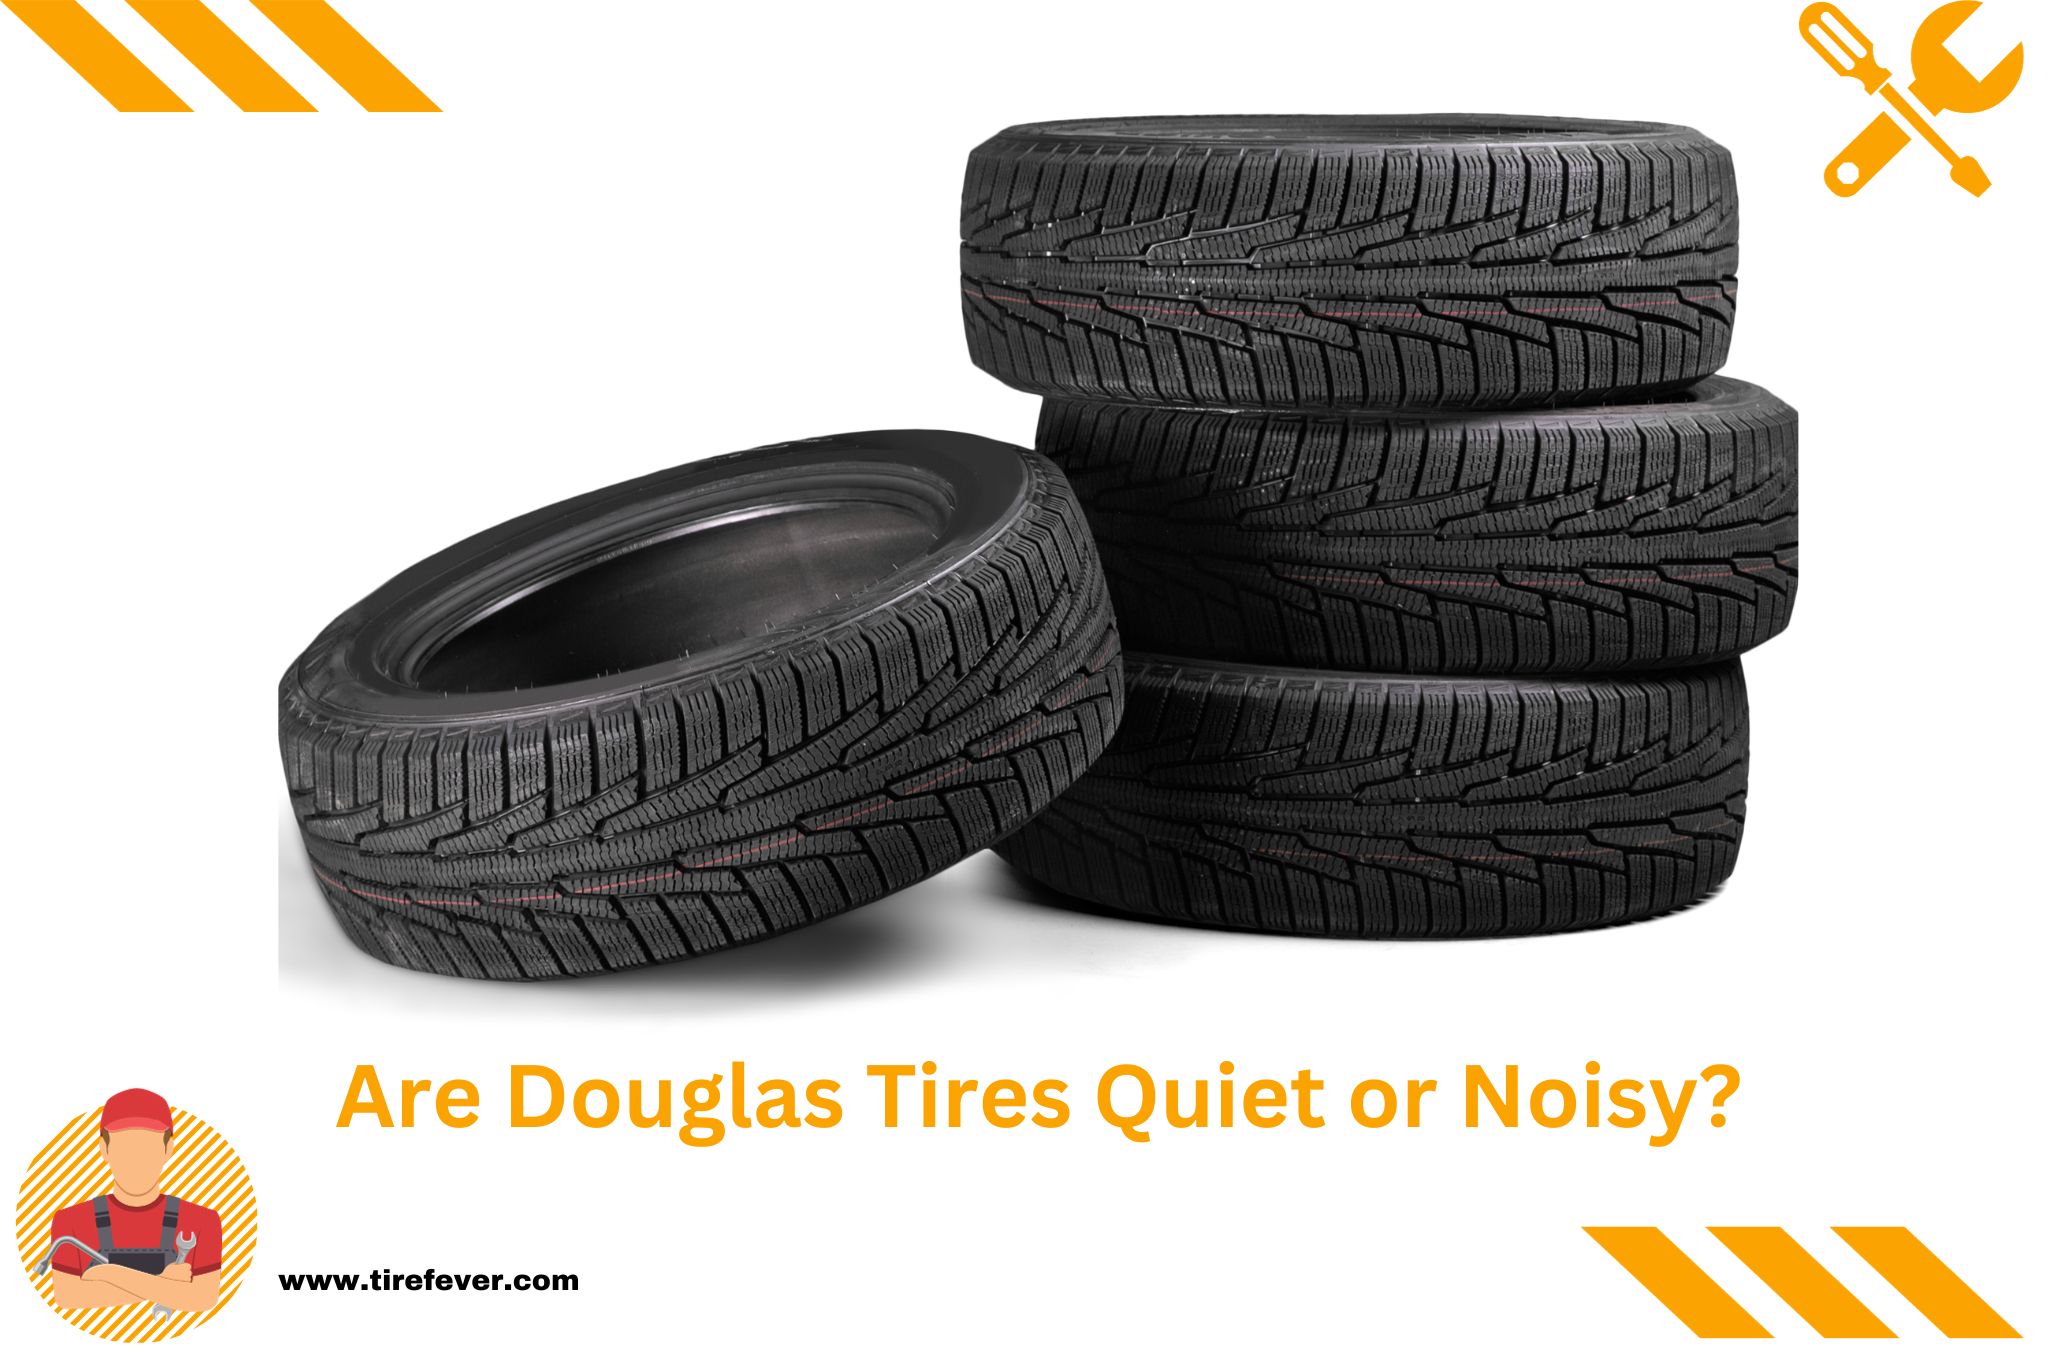 Are Douglas Tires Quiet or Noisy?